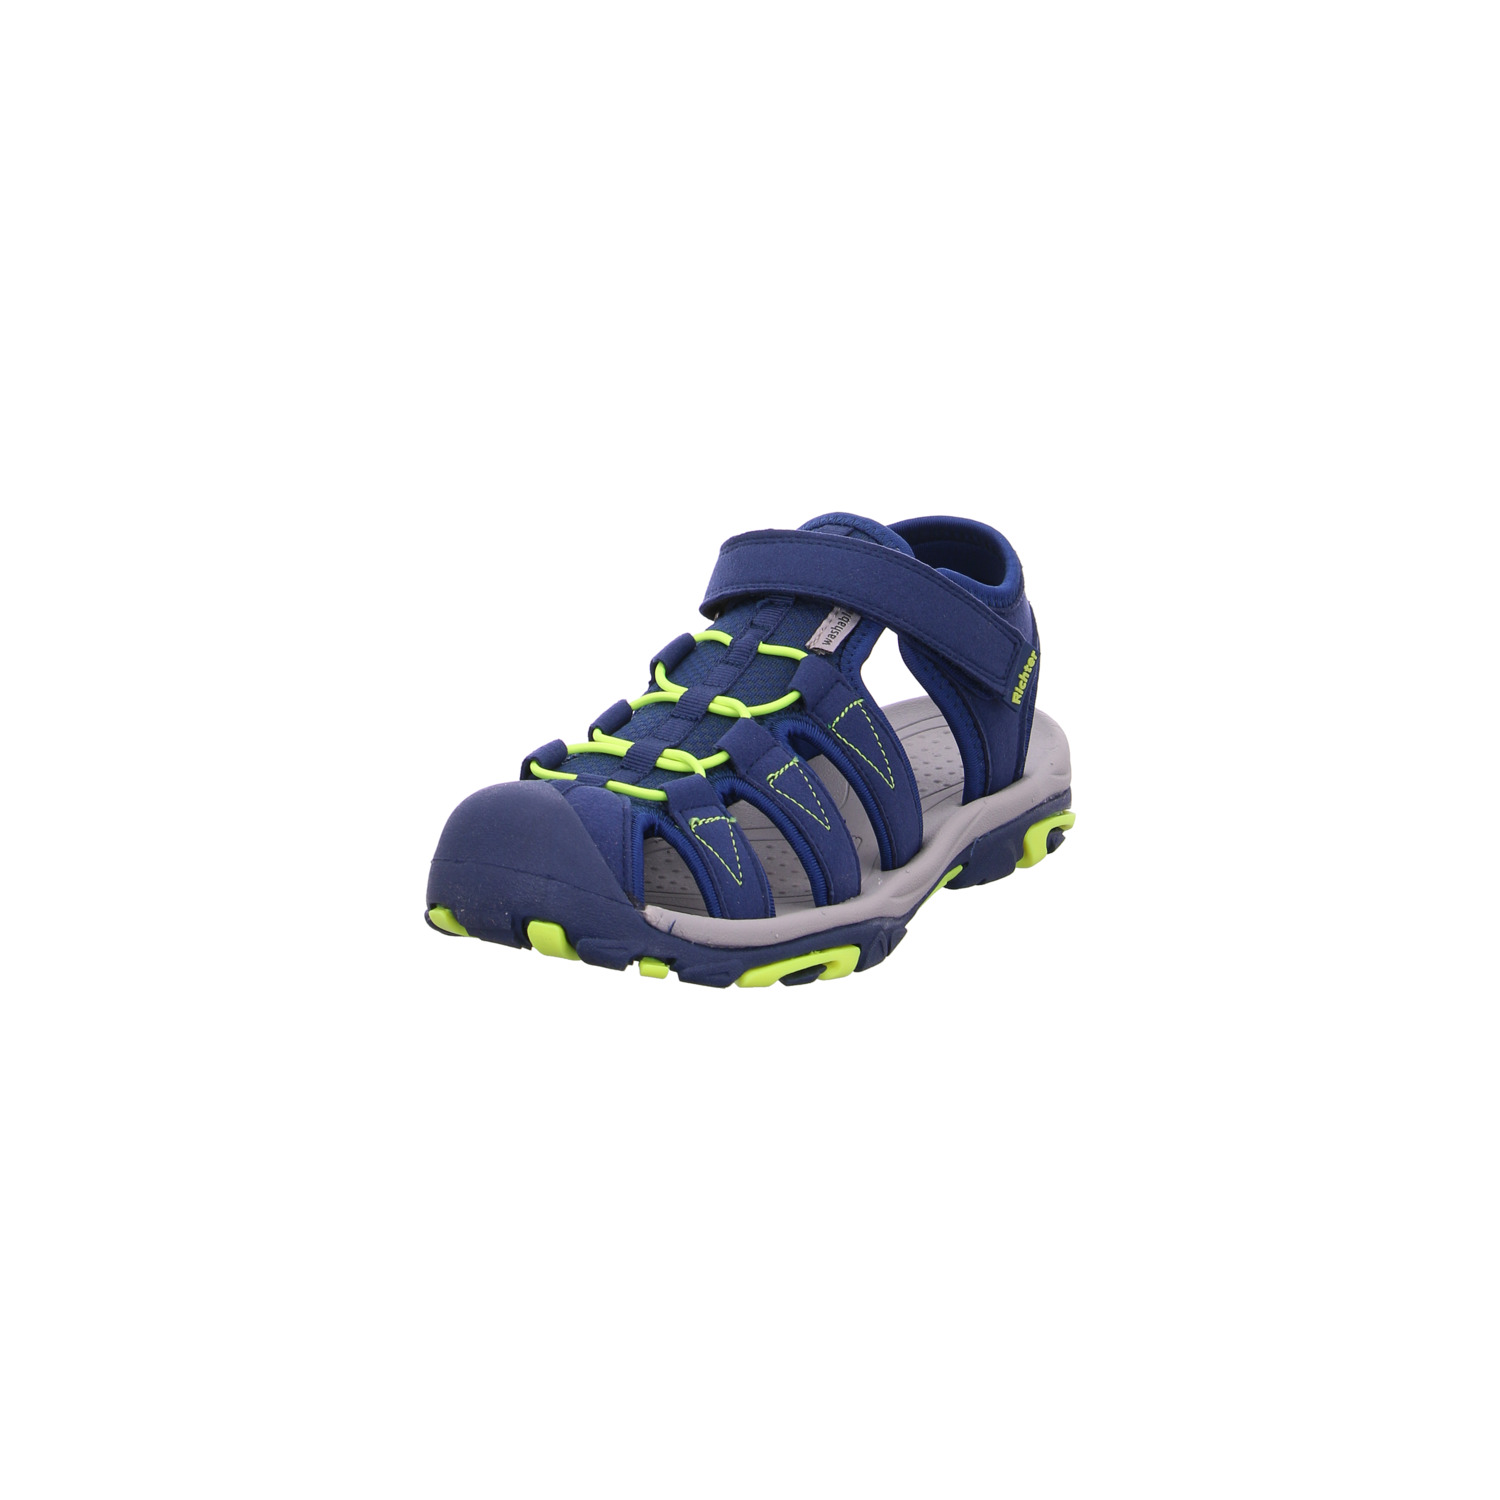 richter-kinder-sandaletten-jungen-blau-119801-26